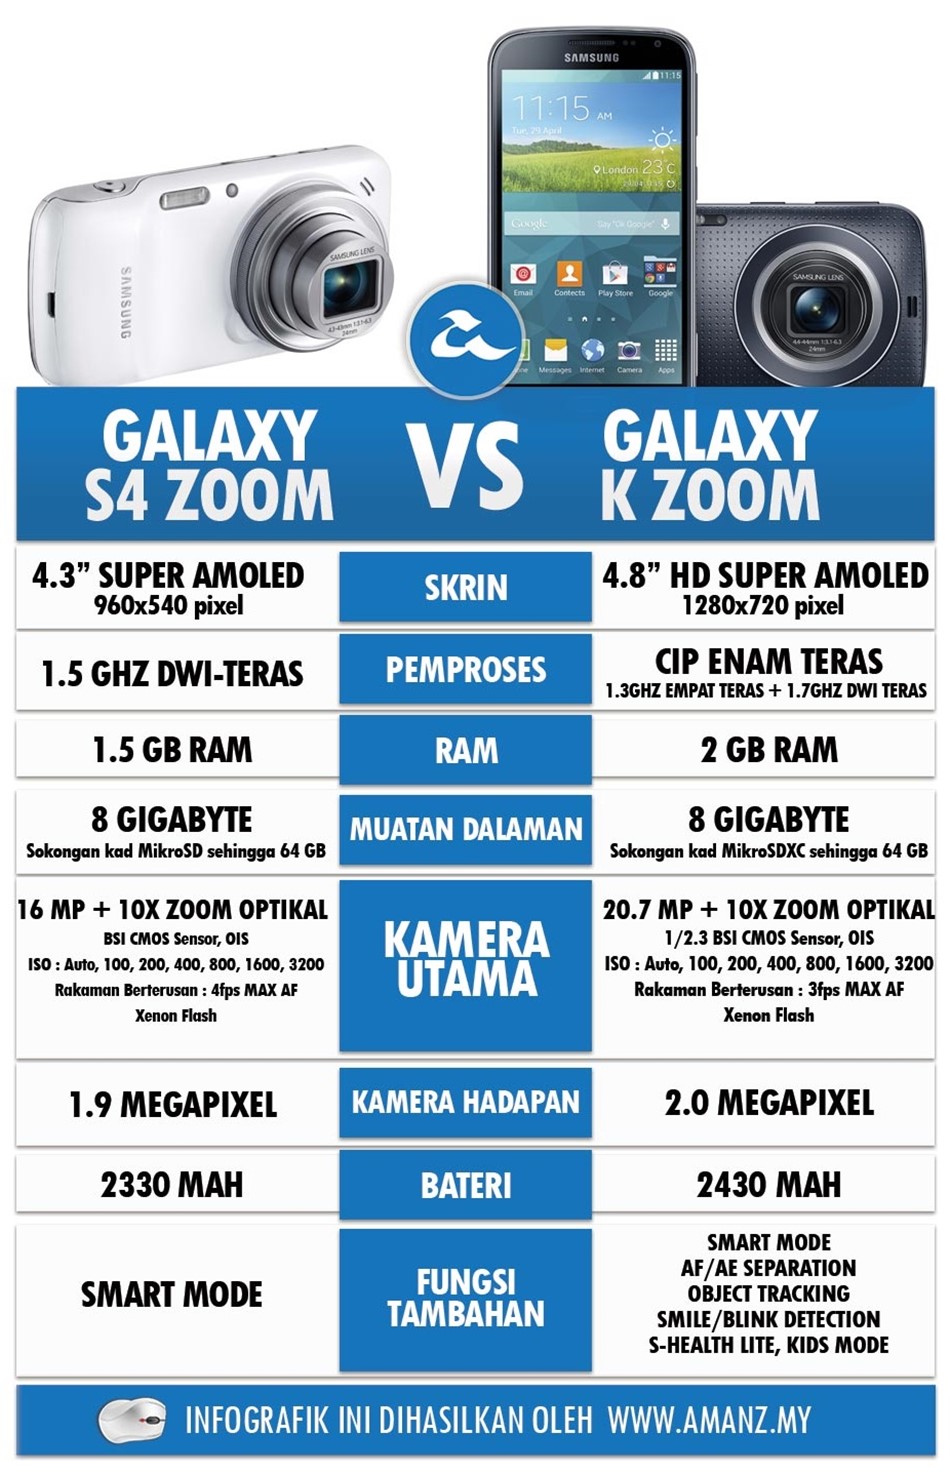 Galaxy S4 Zoom vs Galaxy K Zoom